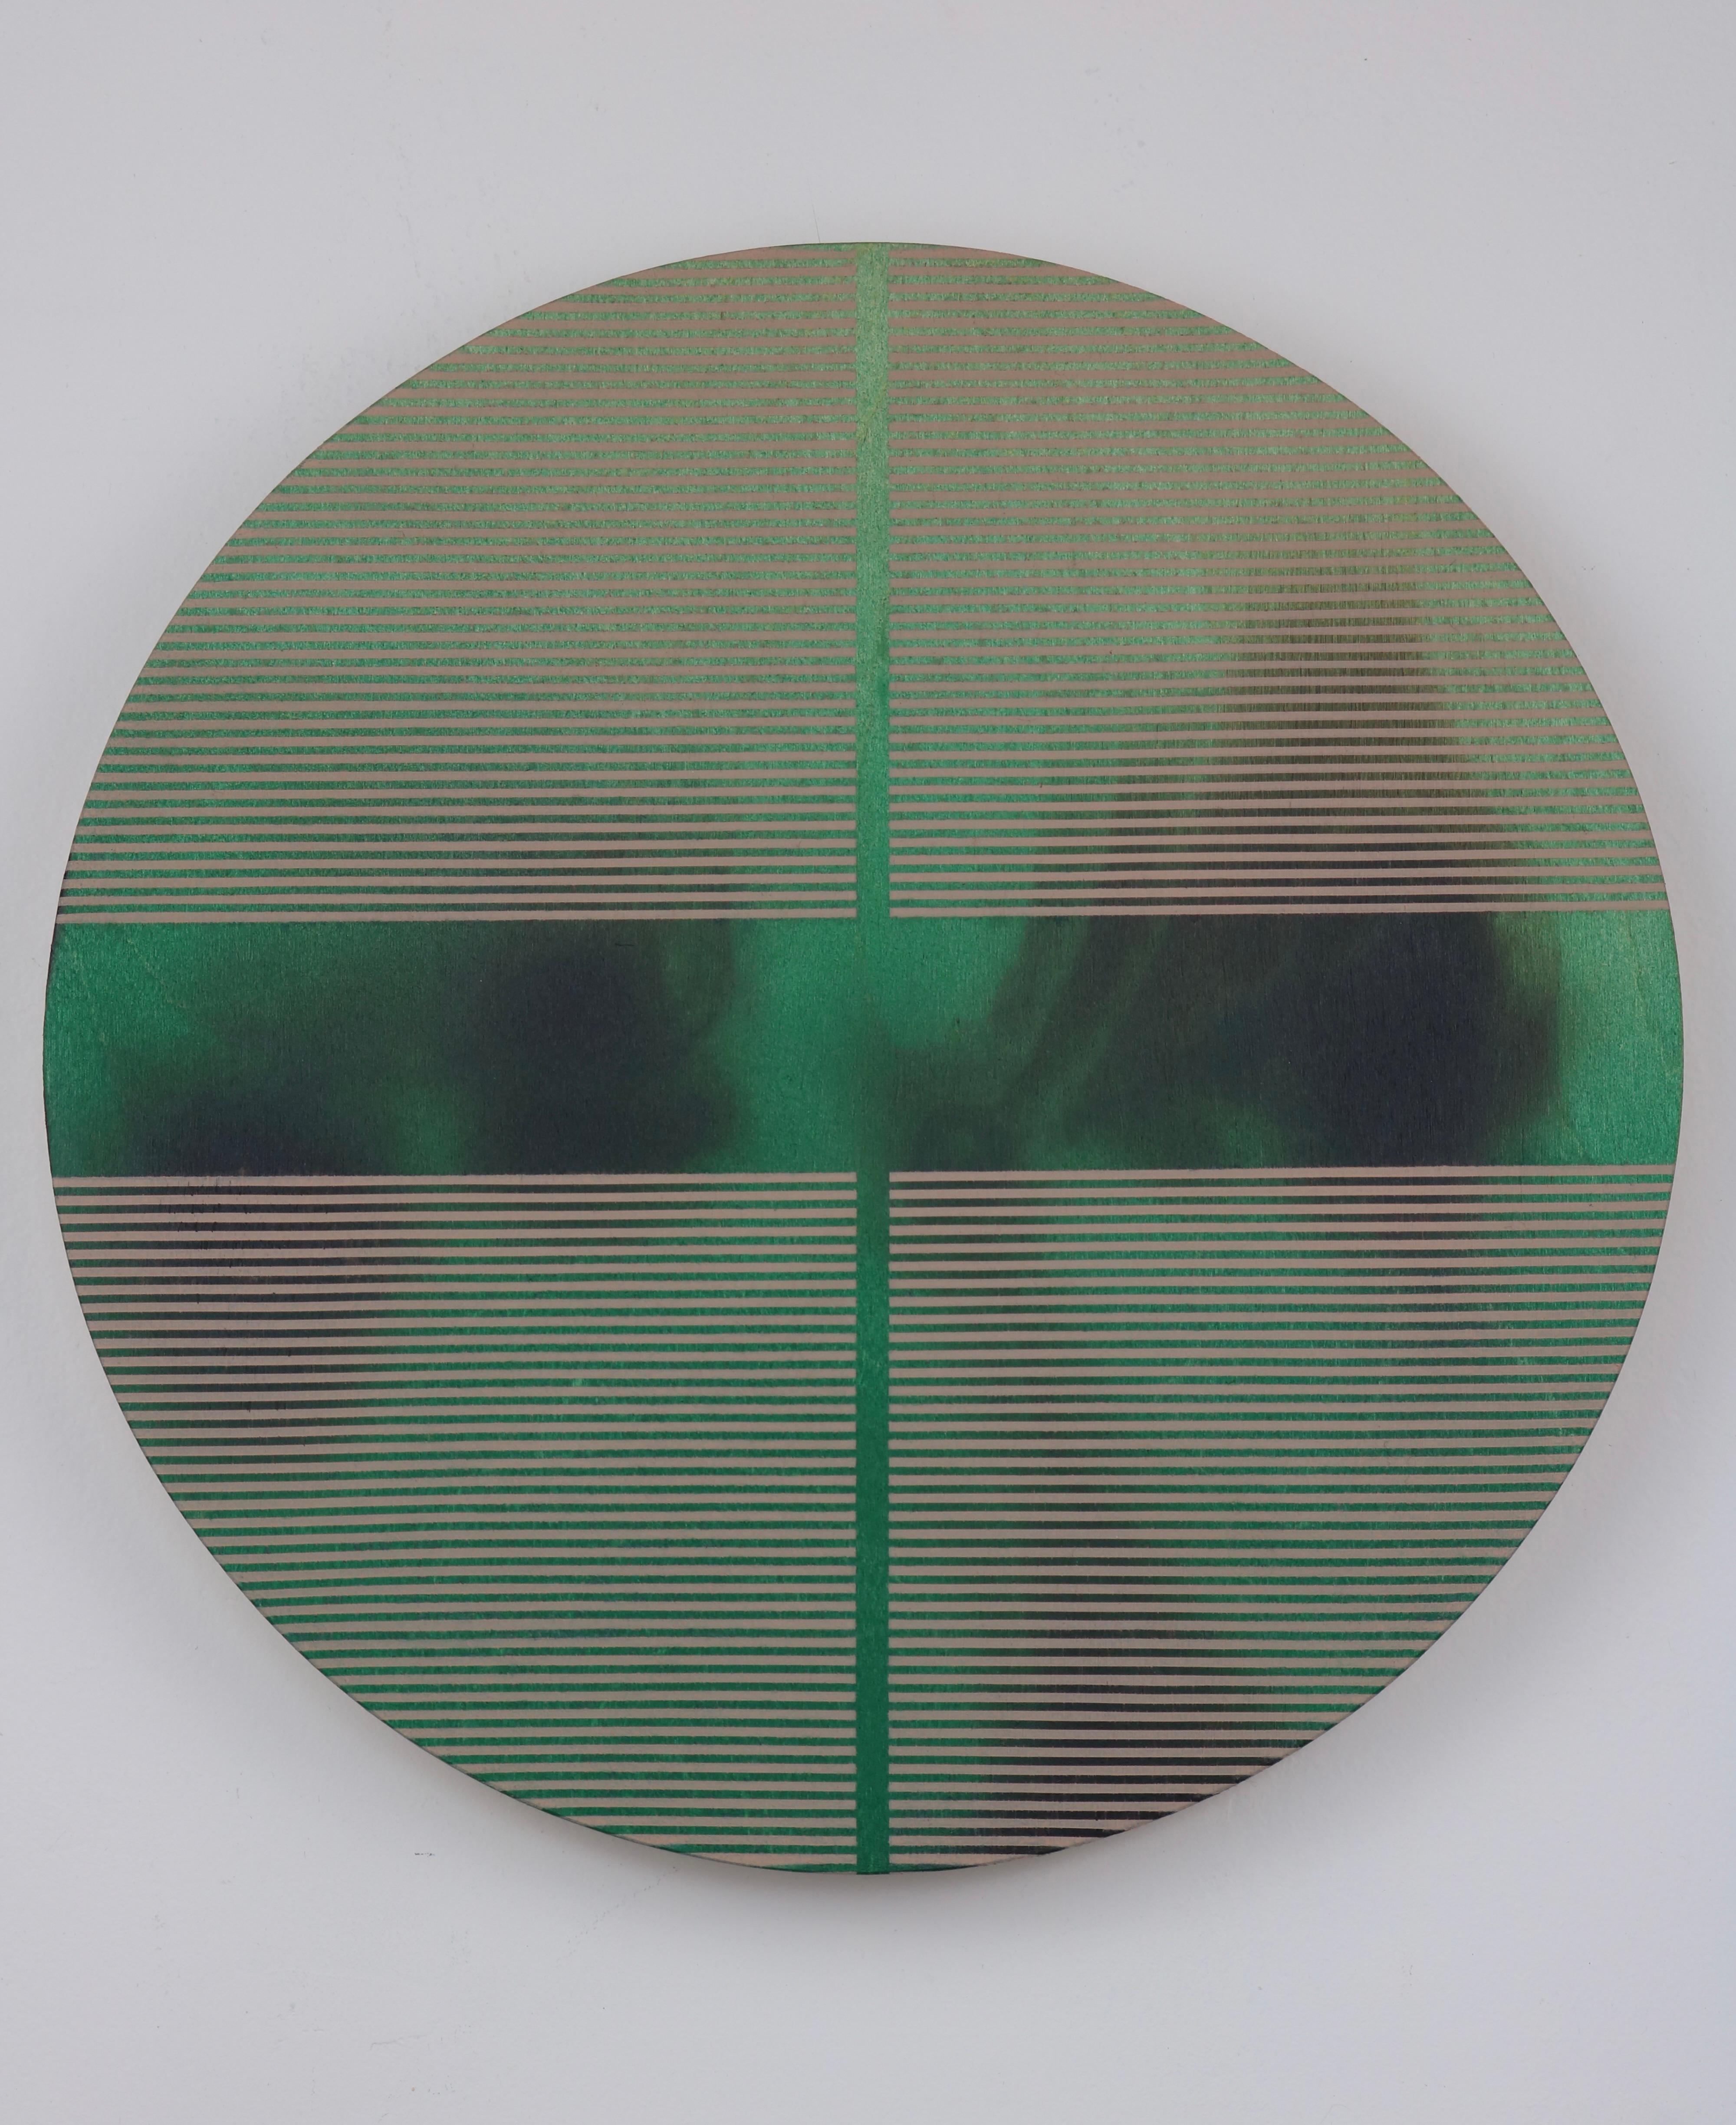 Emerald green pill (minimaliste grid round painting on wood dopamine art) - Mixed Media Art by Melisa Taylor Metzger